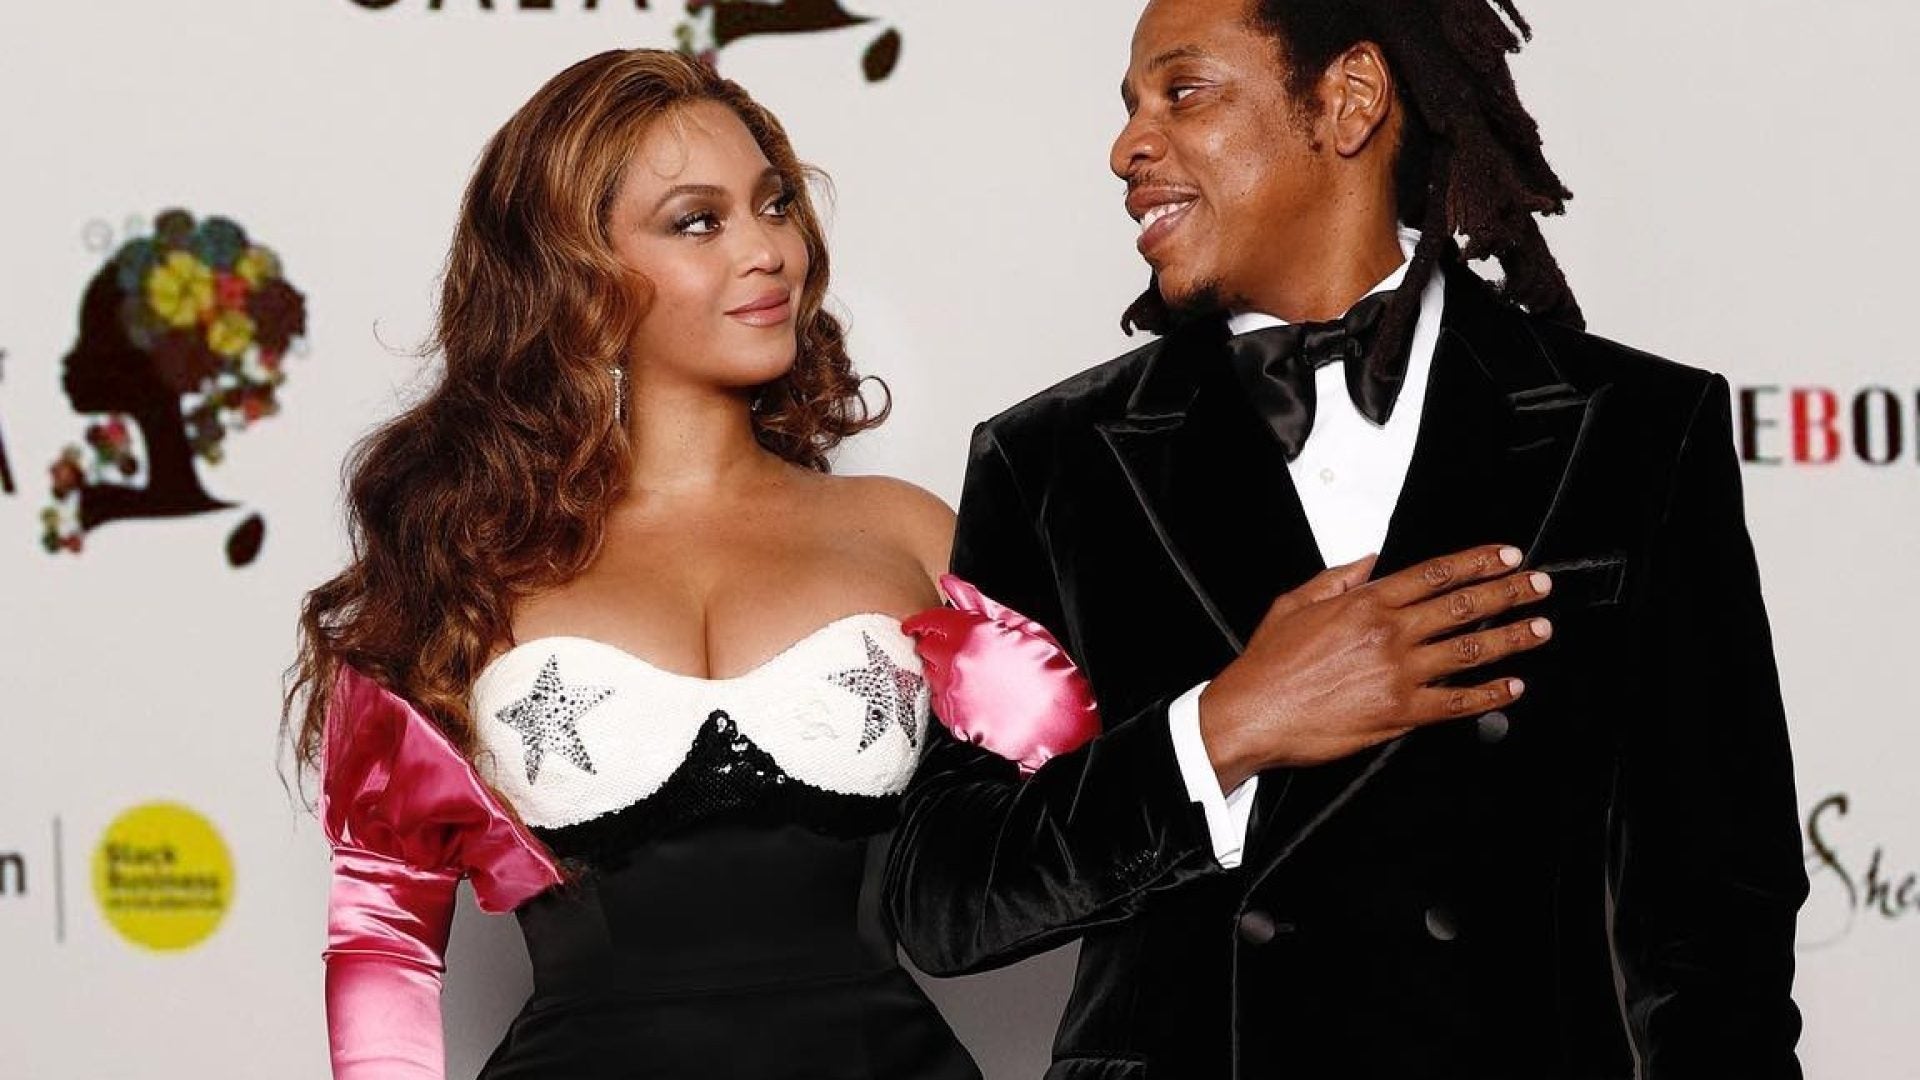 Inside Beyoncé And Jay-Z's New $200 Million Home In Malibu